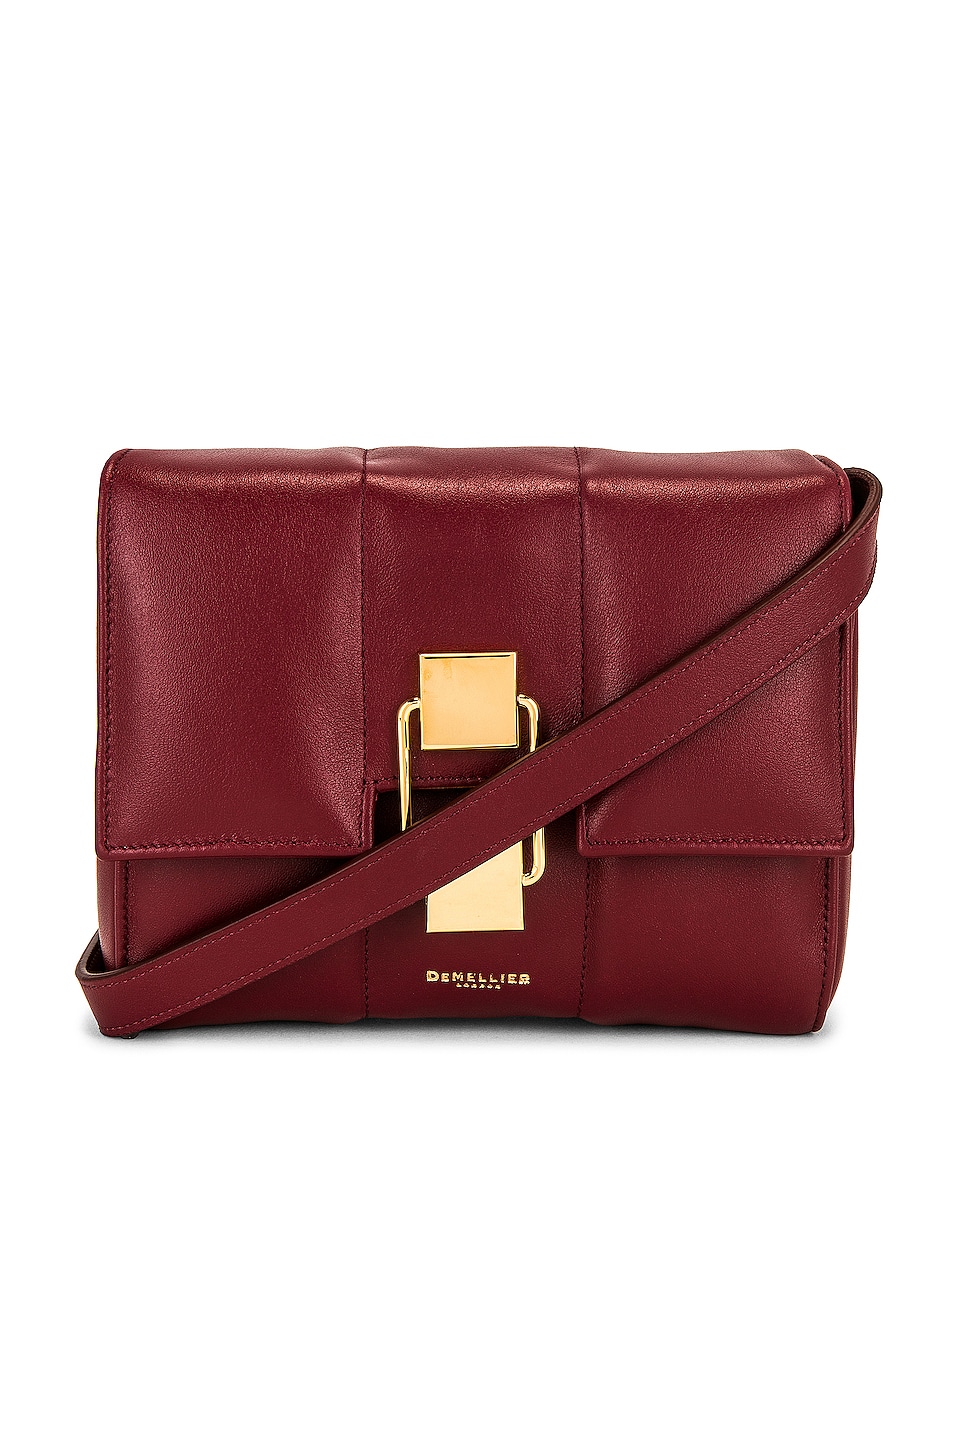 DeMellier London Mini Alexandria Bag in Ruby Smooth | REVOLVE